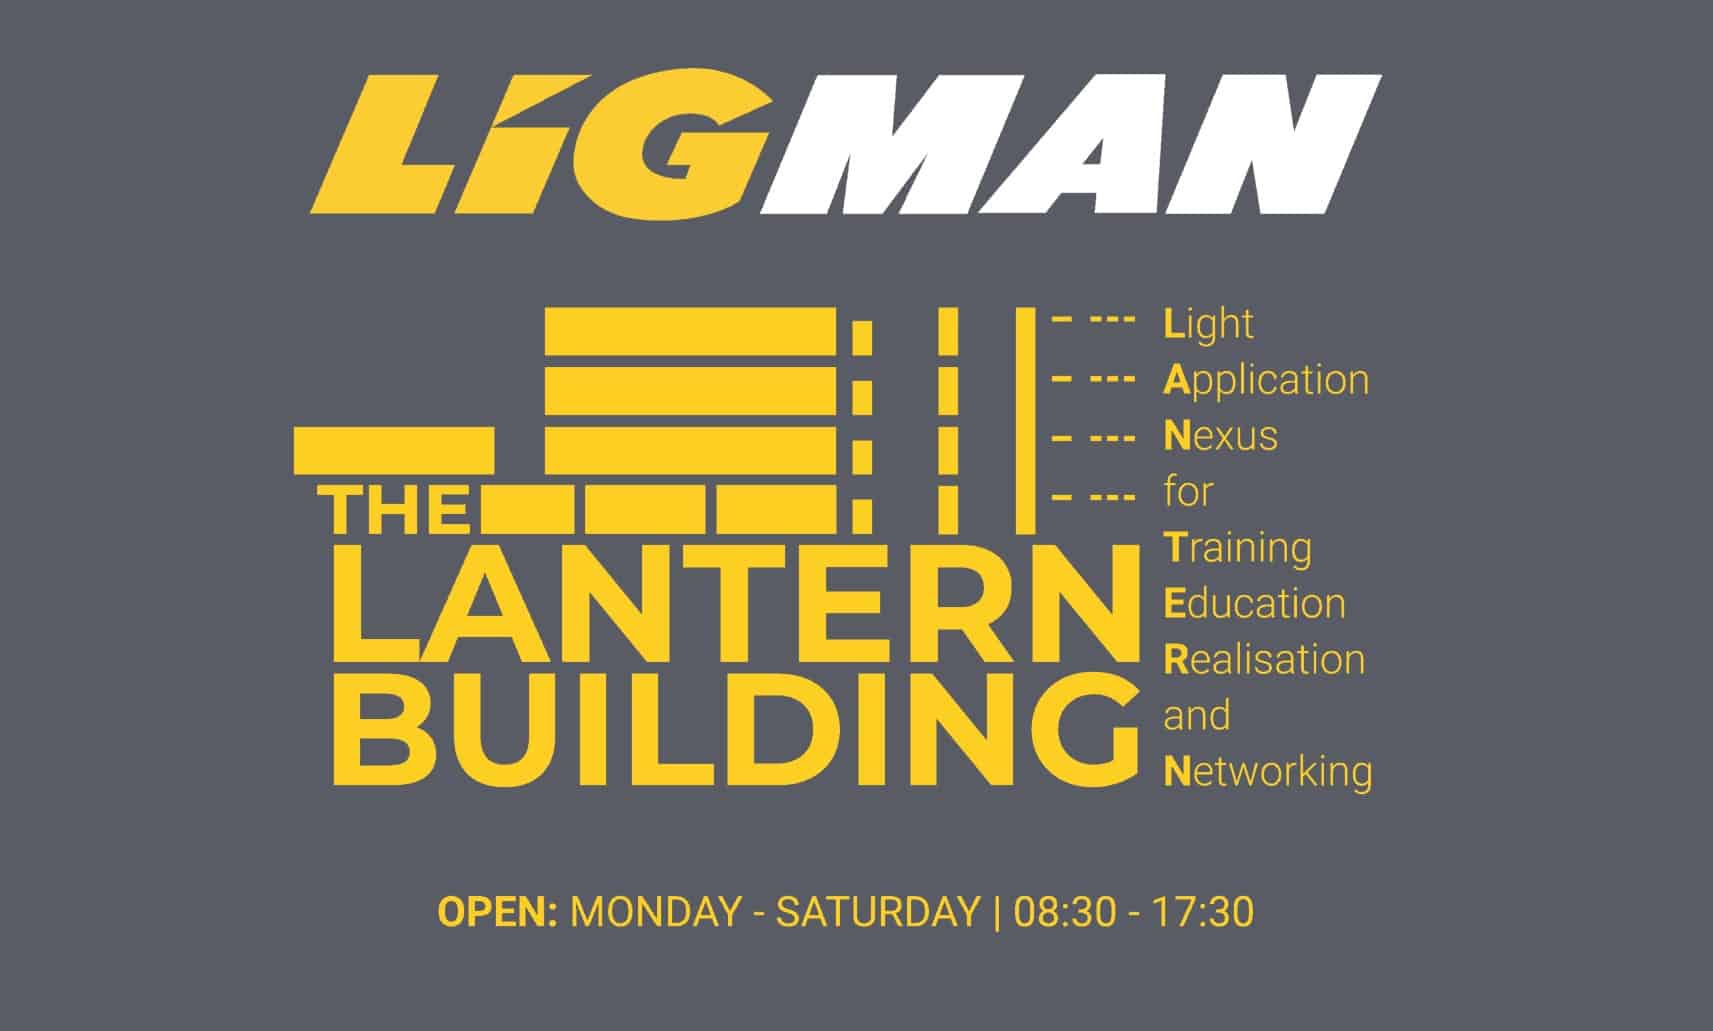 The LIGMAN LANTERN Building